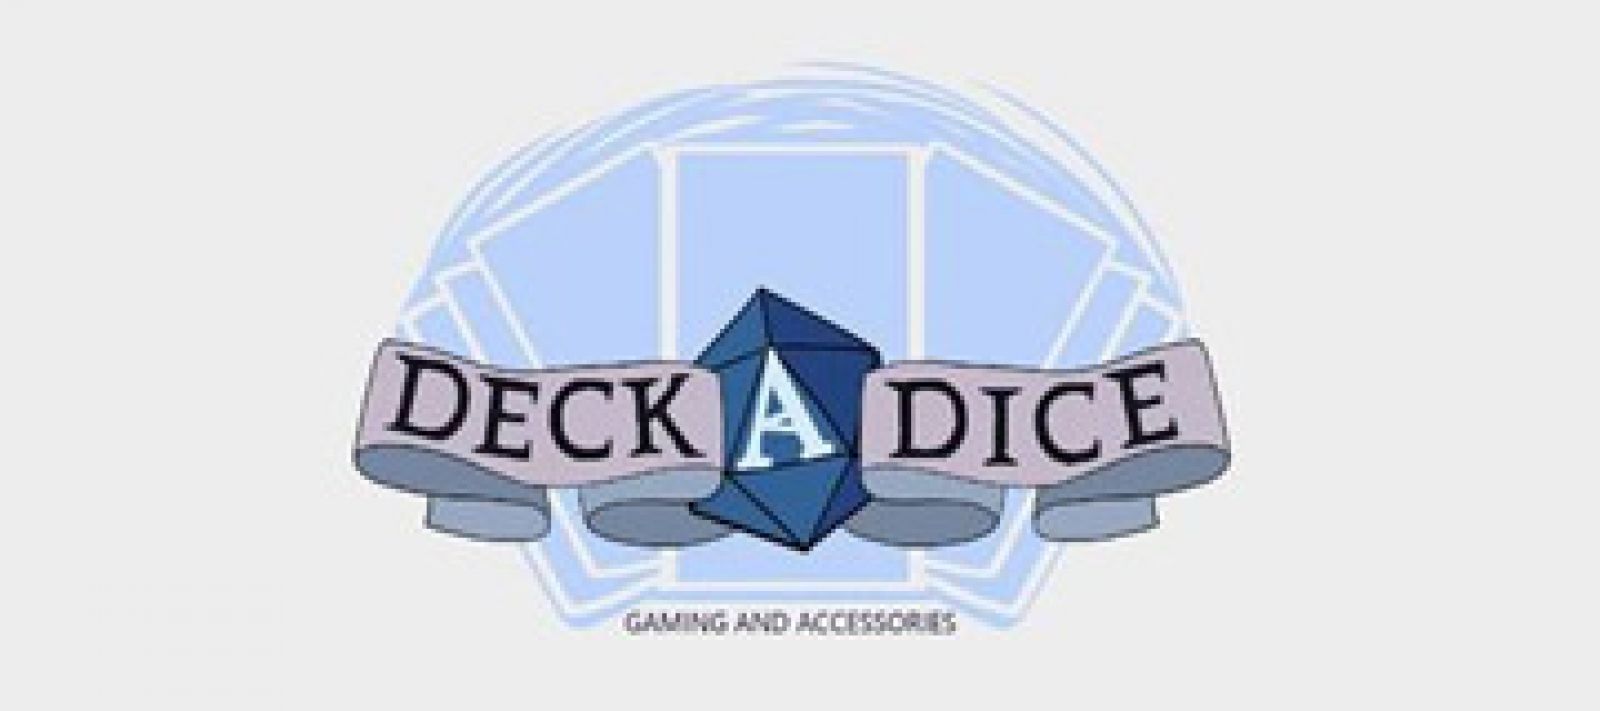 DeckaDice logo banner image